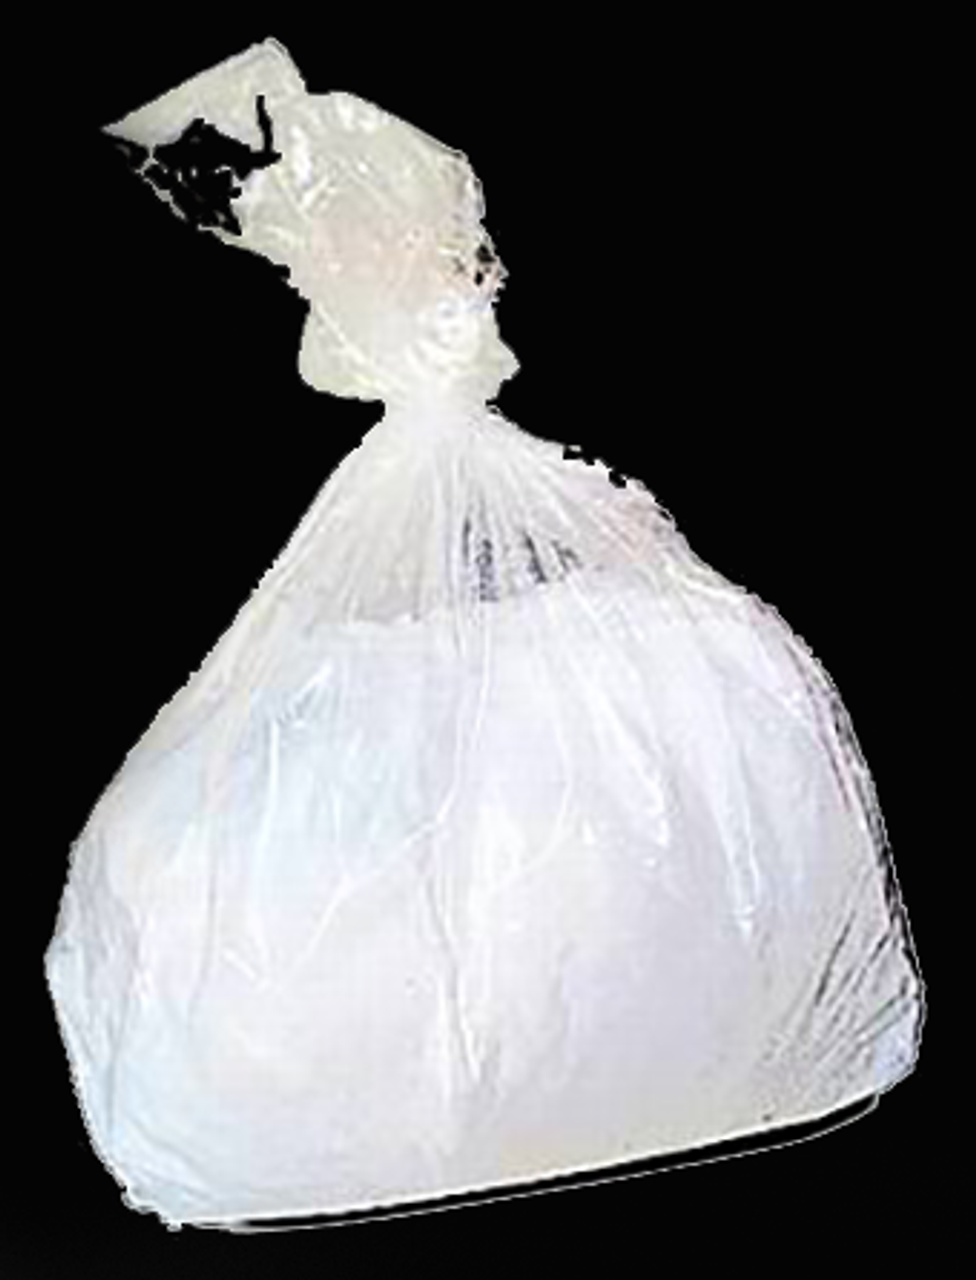 fiberglass icecream bag sculpture shopping mall| Alibaba.com